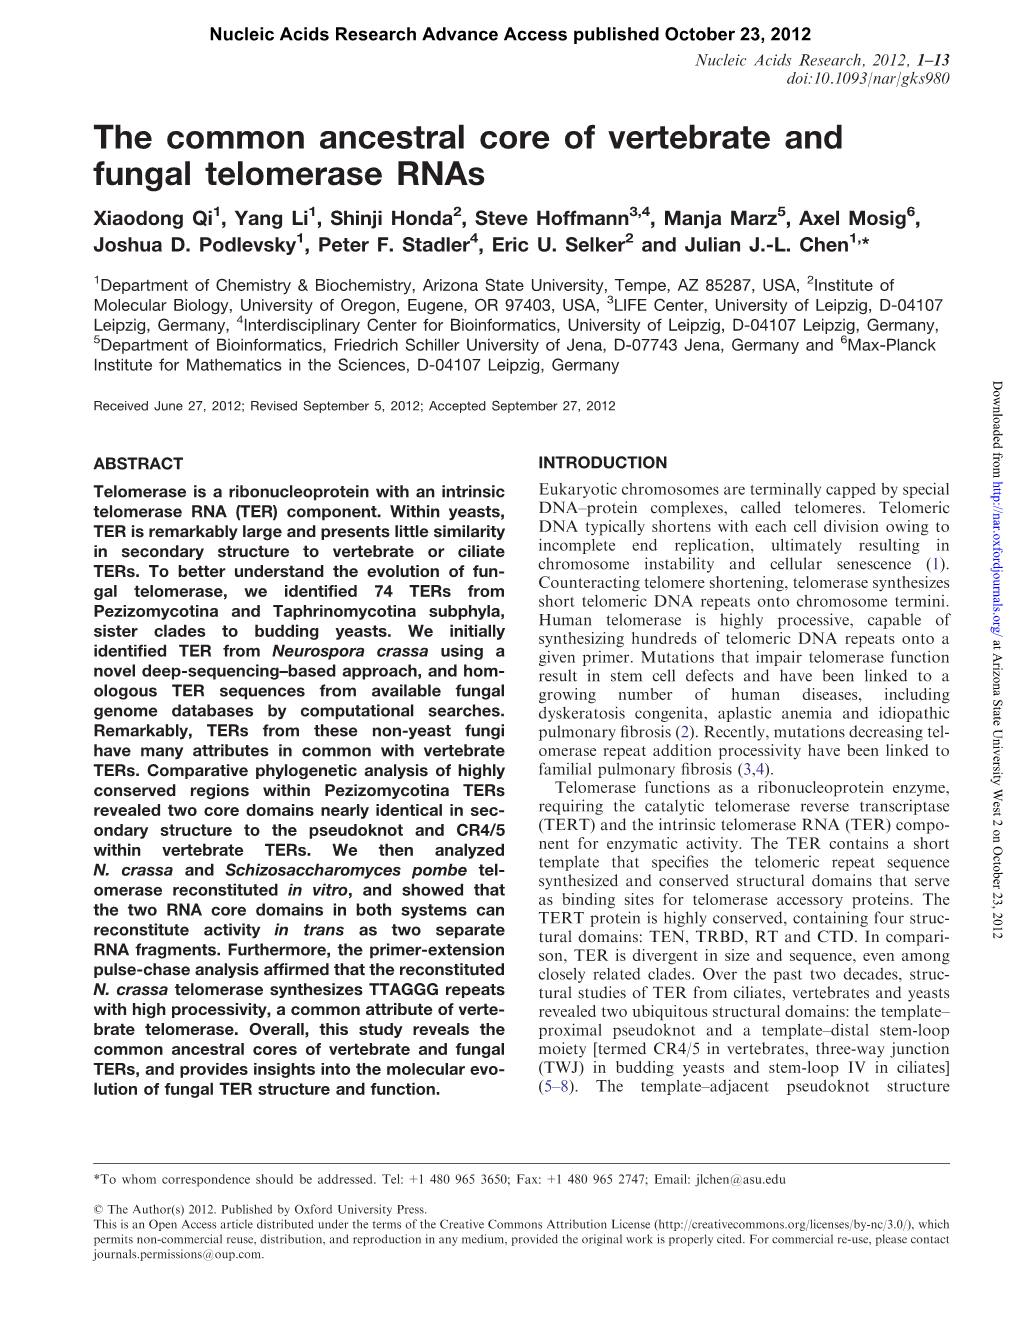 The Common Ancestral Core of Vertebrate and Fungal Telomerase Rnas Xiaodong Qi1, Yang Li1, Shinji Honda2, Steve Hoffmann3,4, Manja Marz5, Axel Mosig6, Joshua D